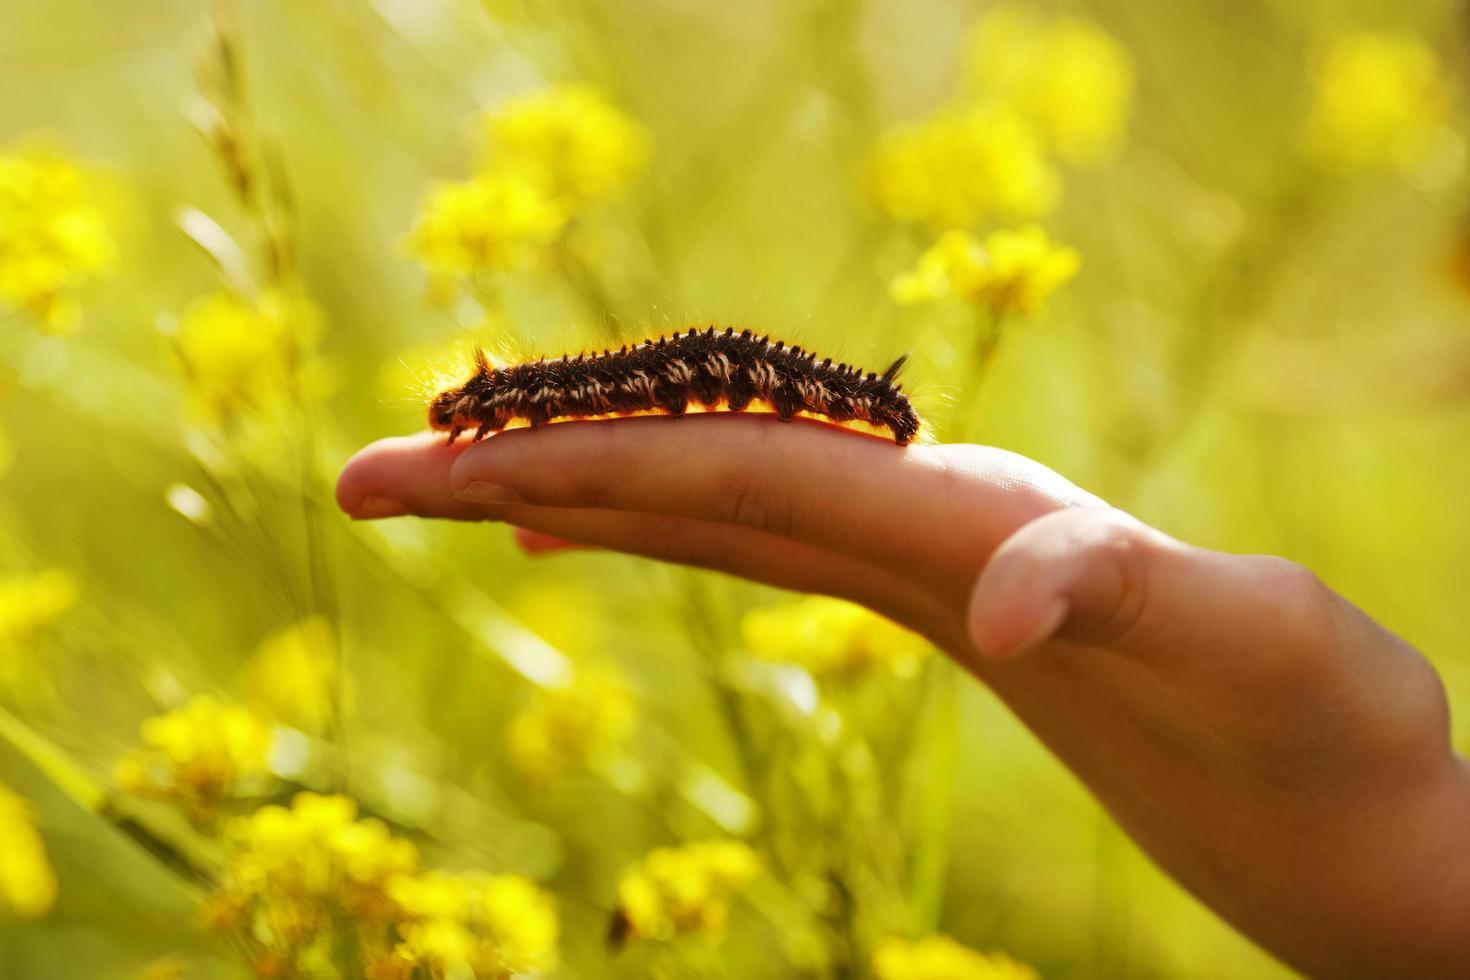 Large hairy caterpillar crawling on arm photo